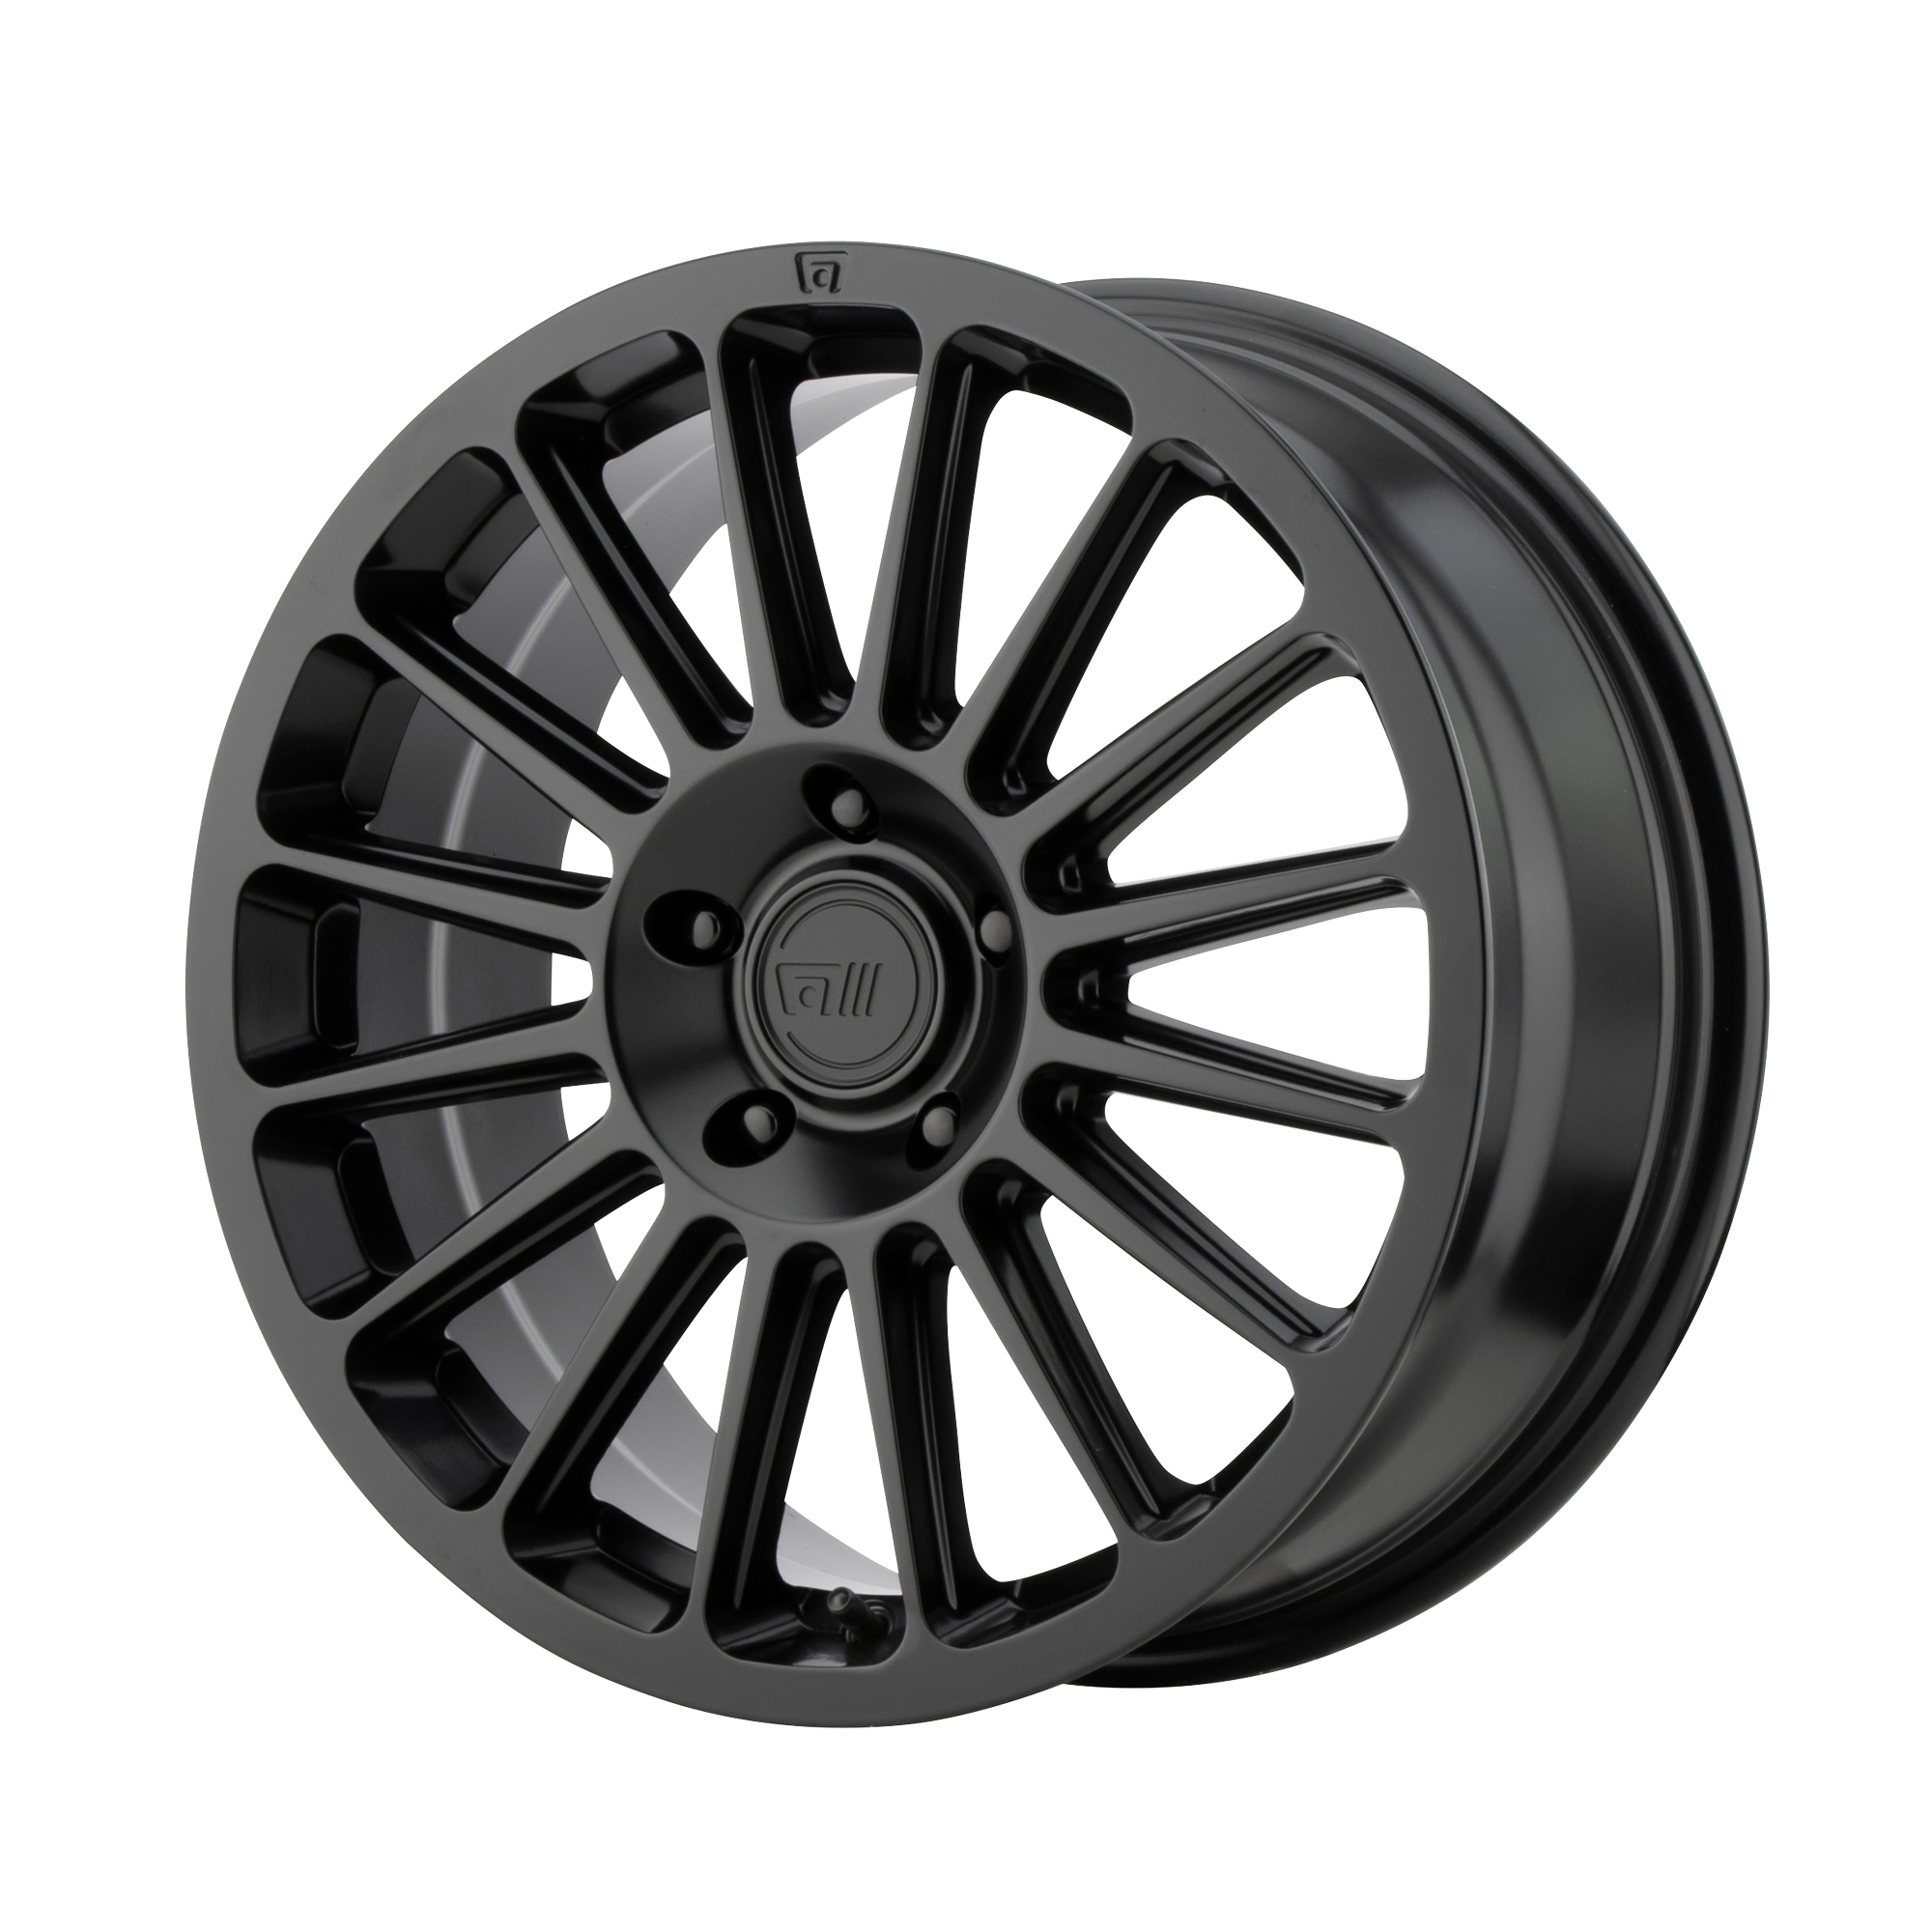 MR141 17x7.5 5x114.30 SATIN BLACK (40 mm) - Tires and Engine Performance